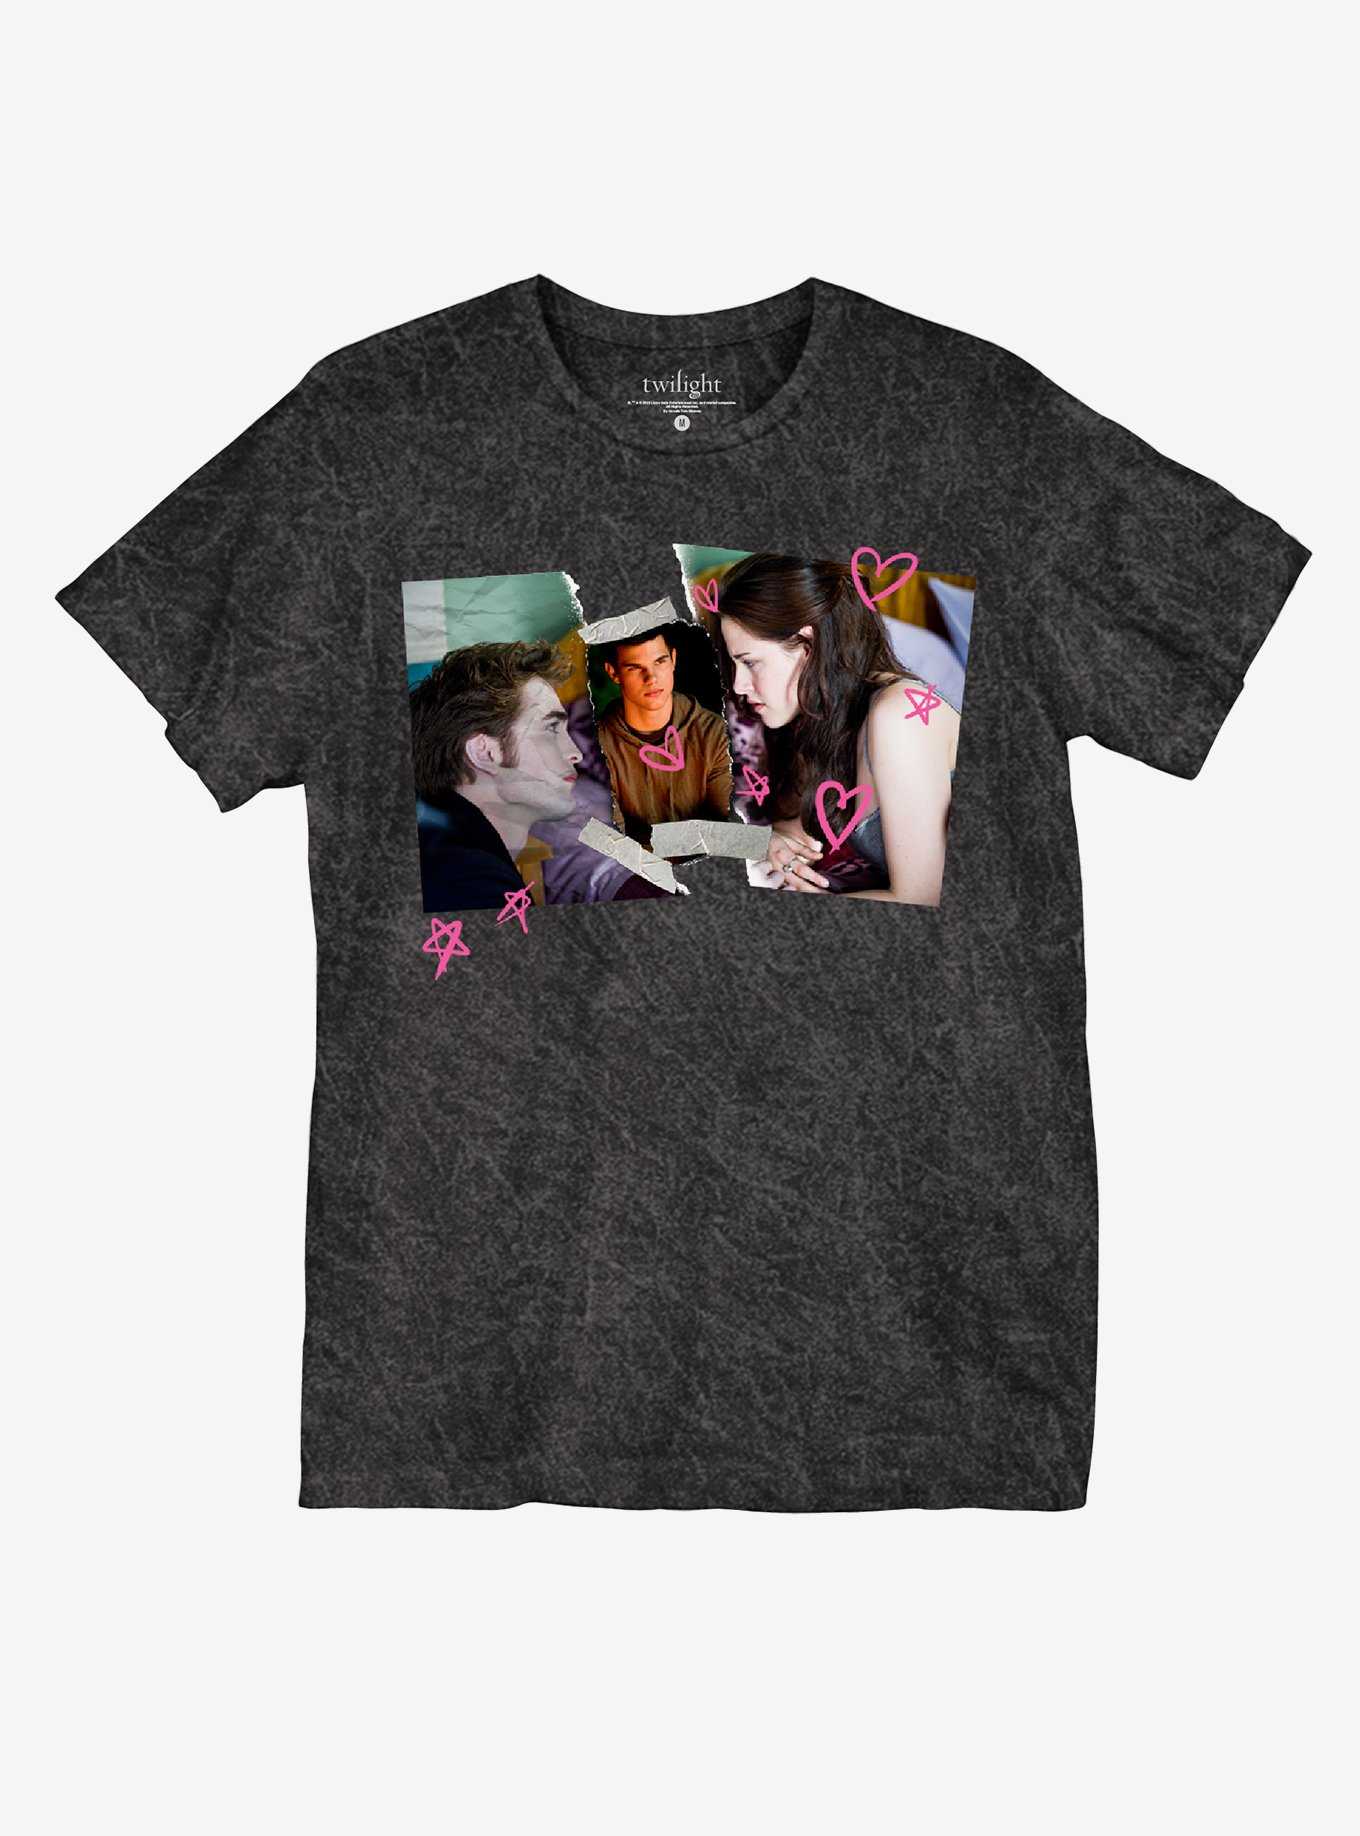 Twilight Saga Love Triangle T-Shirt, Men's Graphic Movie Tees